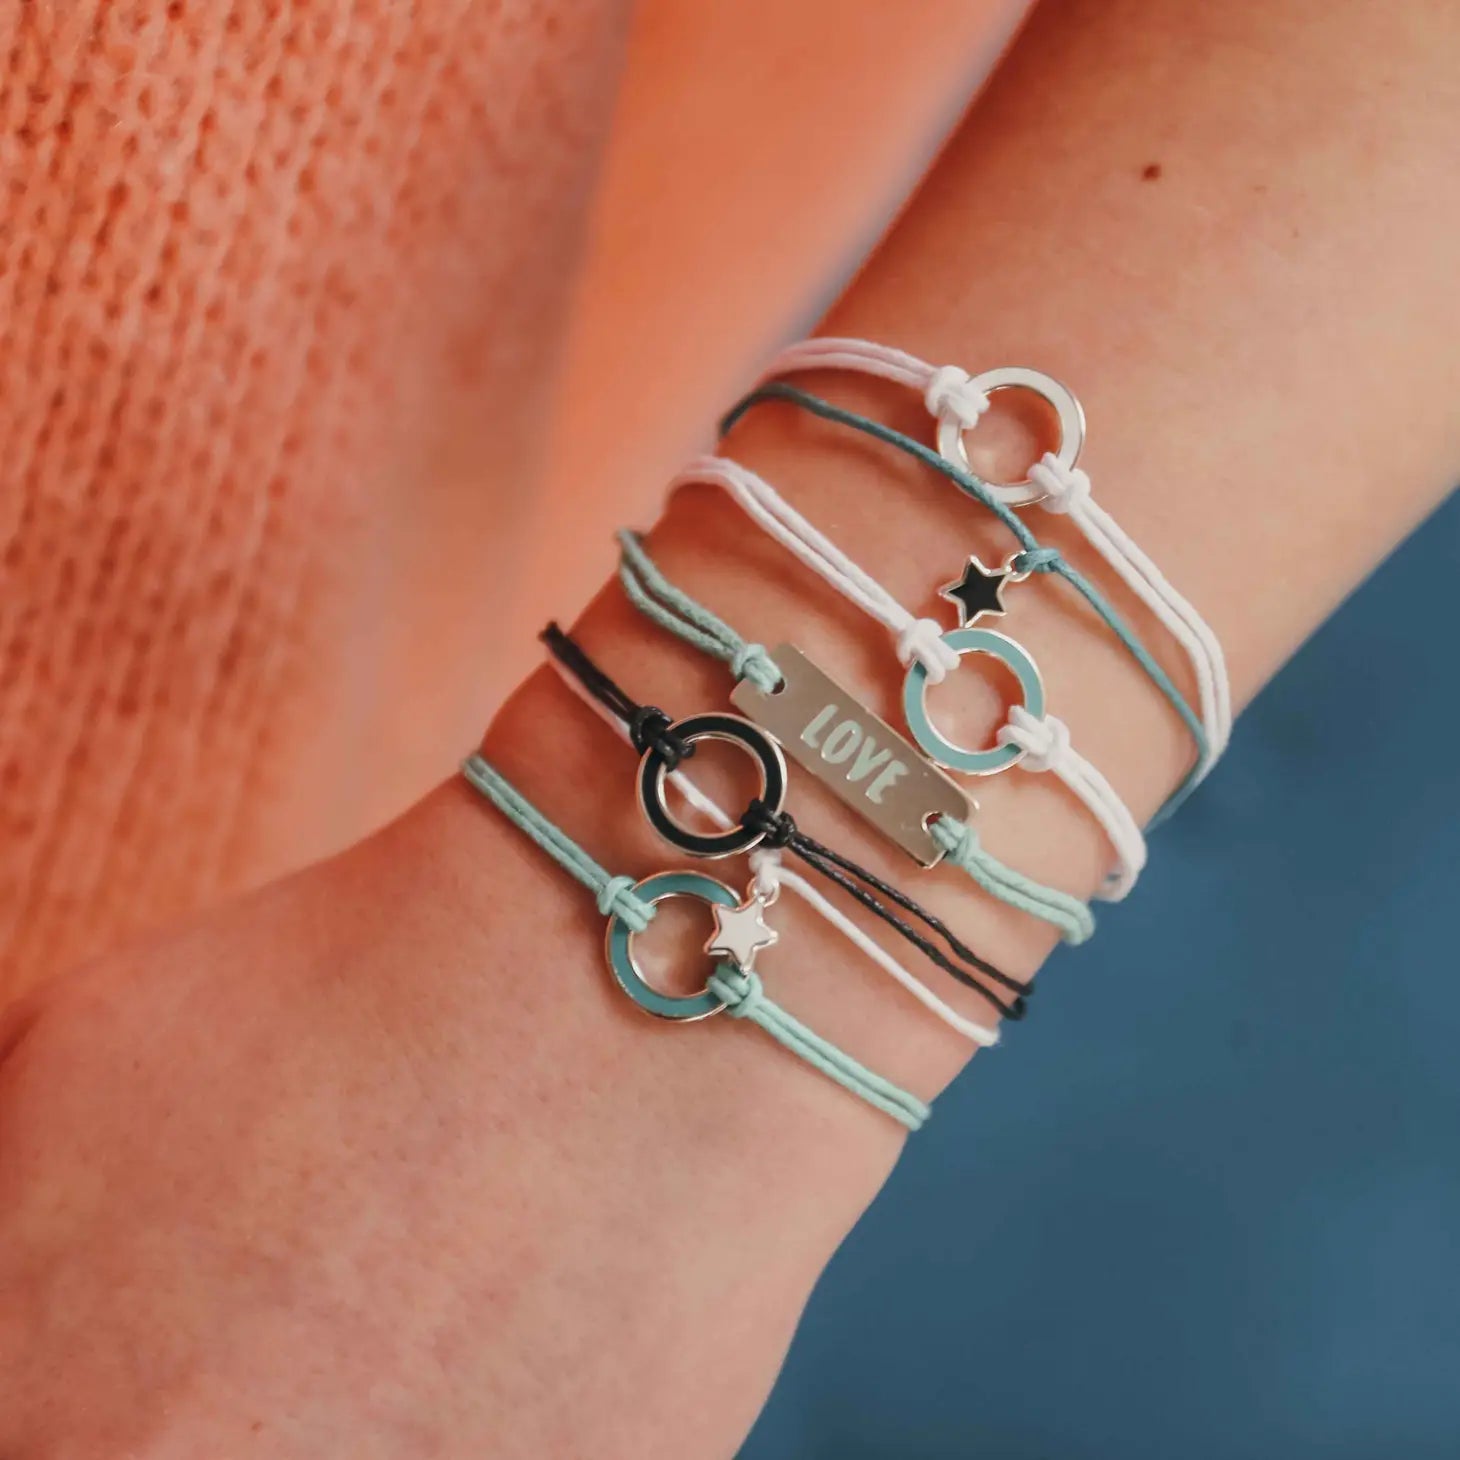 'Unstoppable!' Sentiment String Charm Bracelet - The Little Jewellery Company